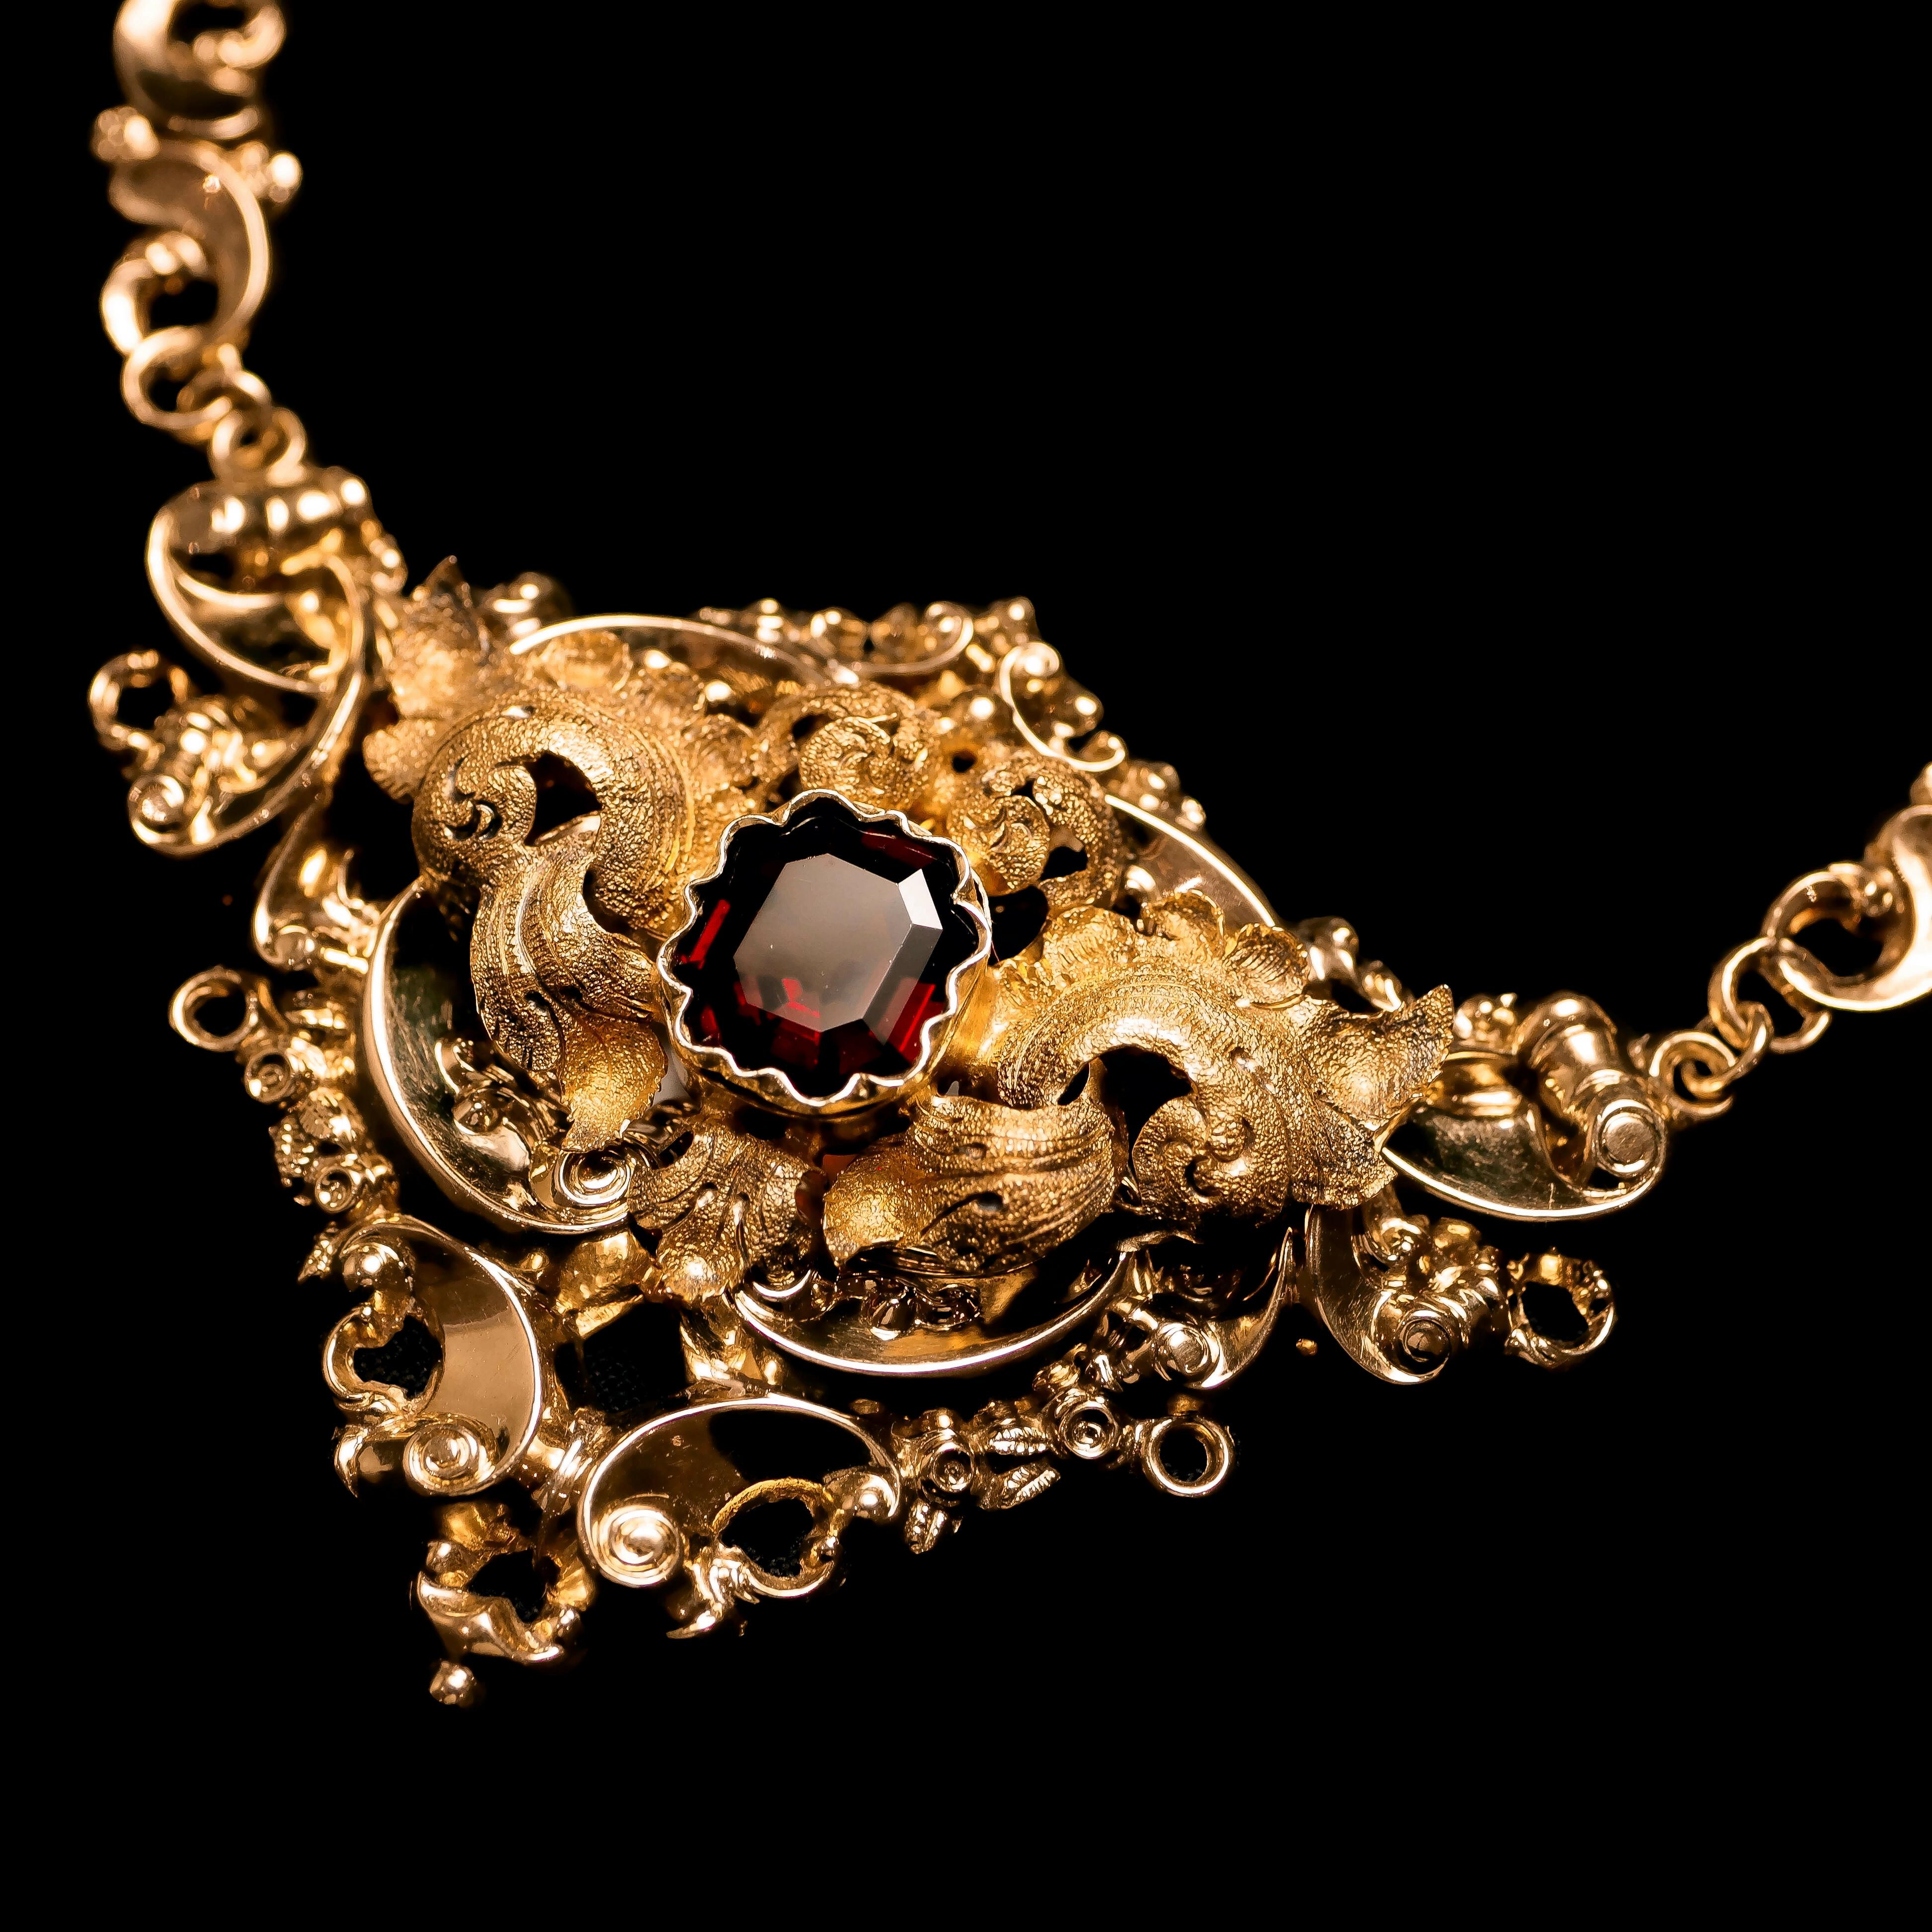 Antique Victorian 18K Gold Garnet Necklace in Baroque Revival Style, c.1840 6